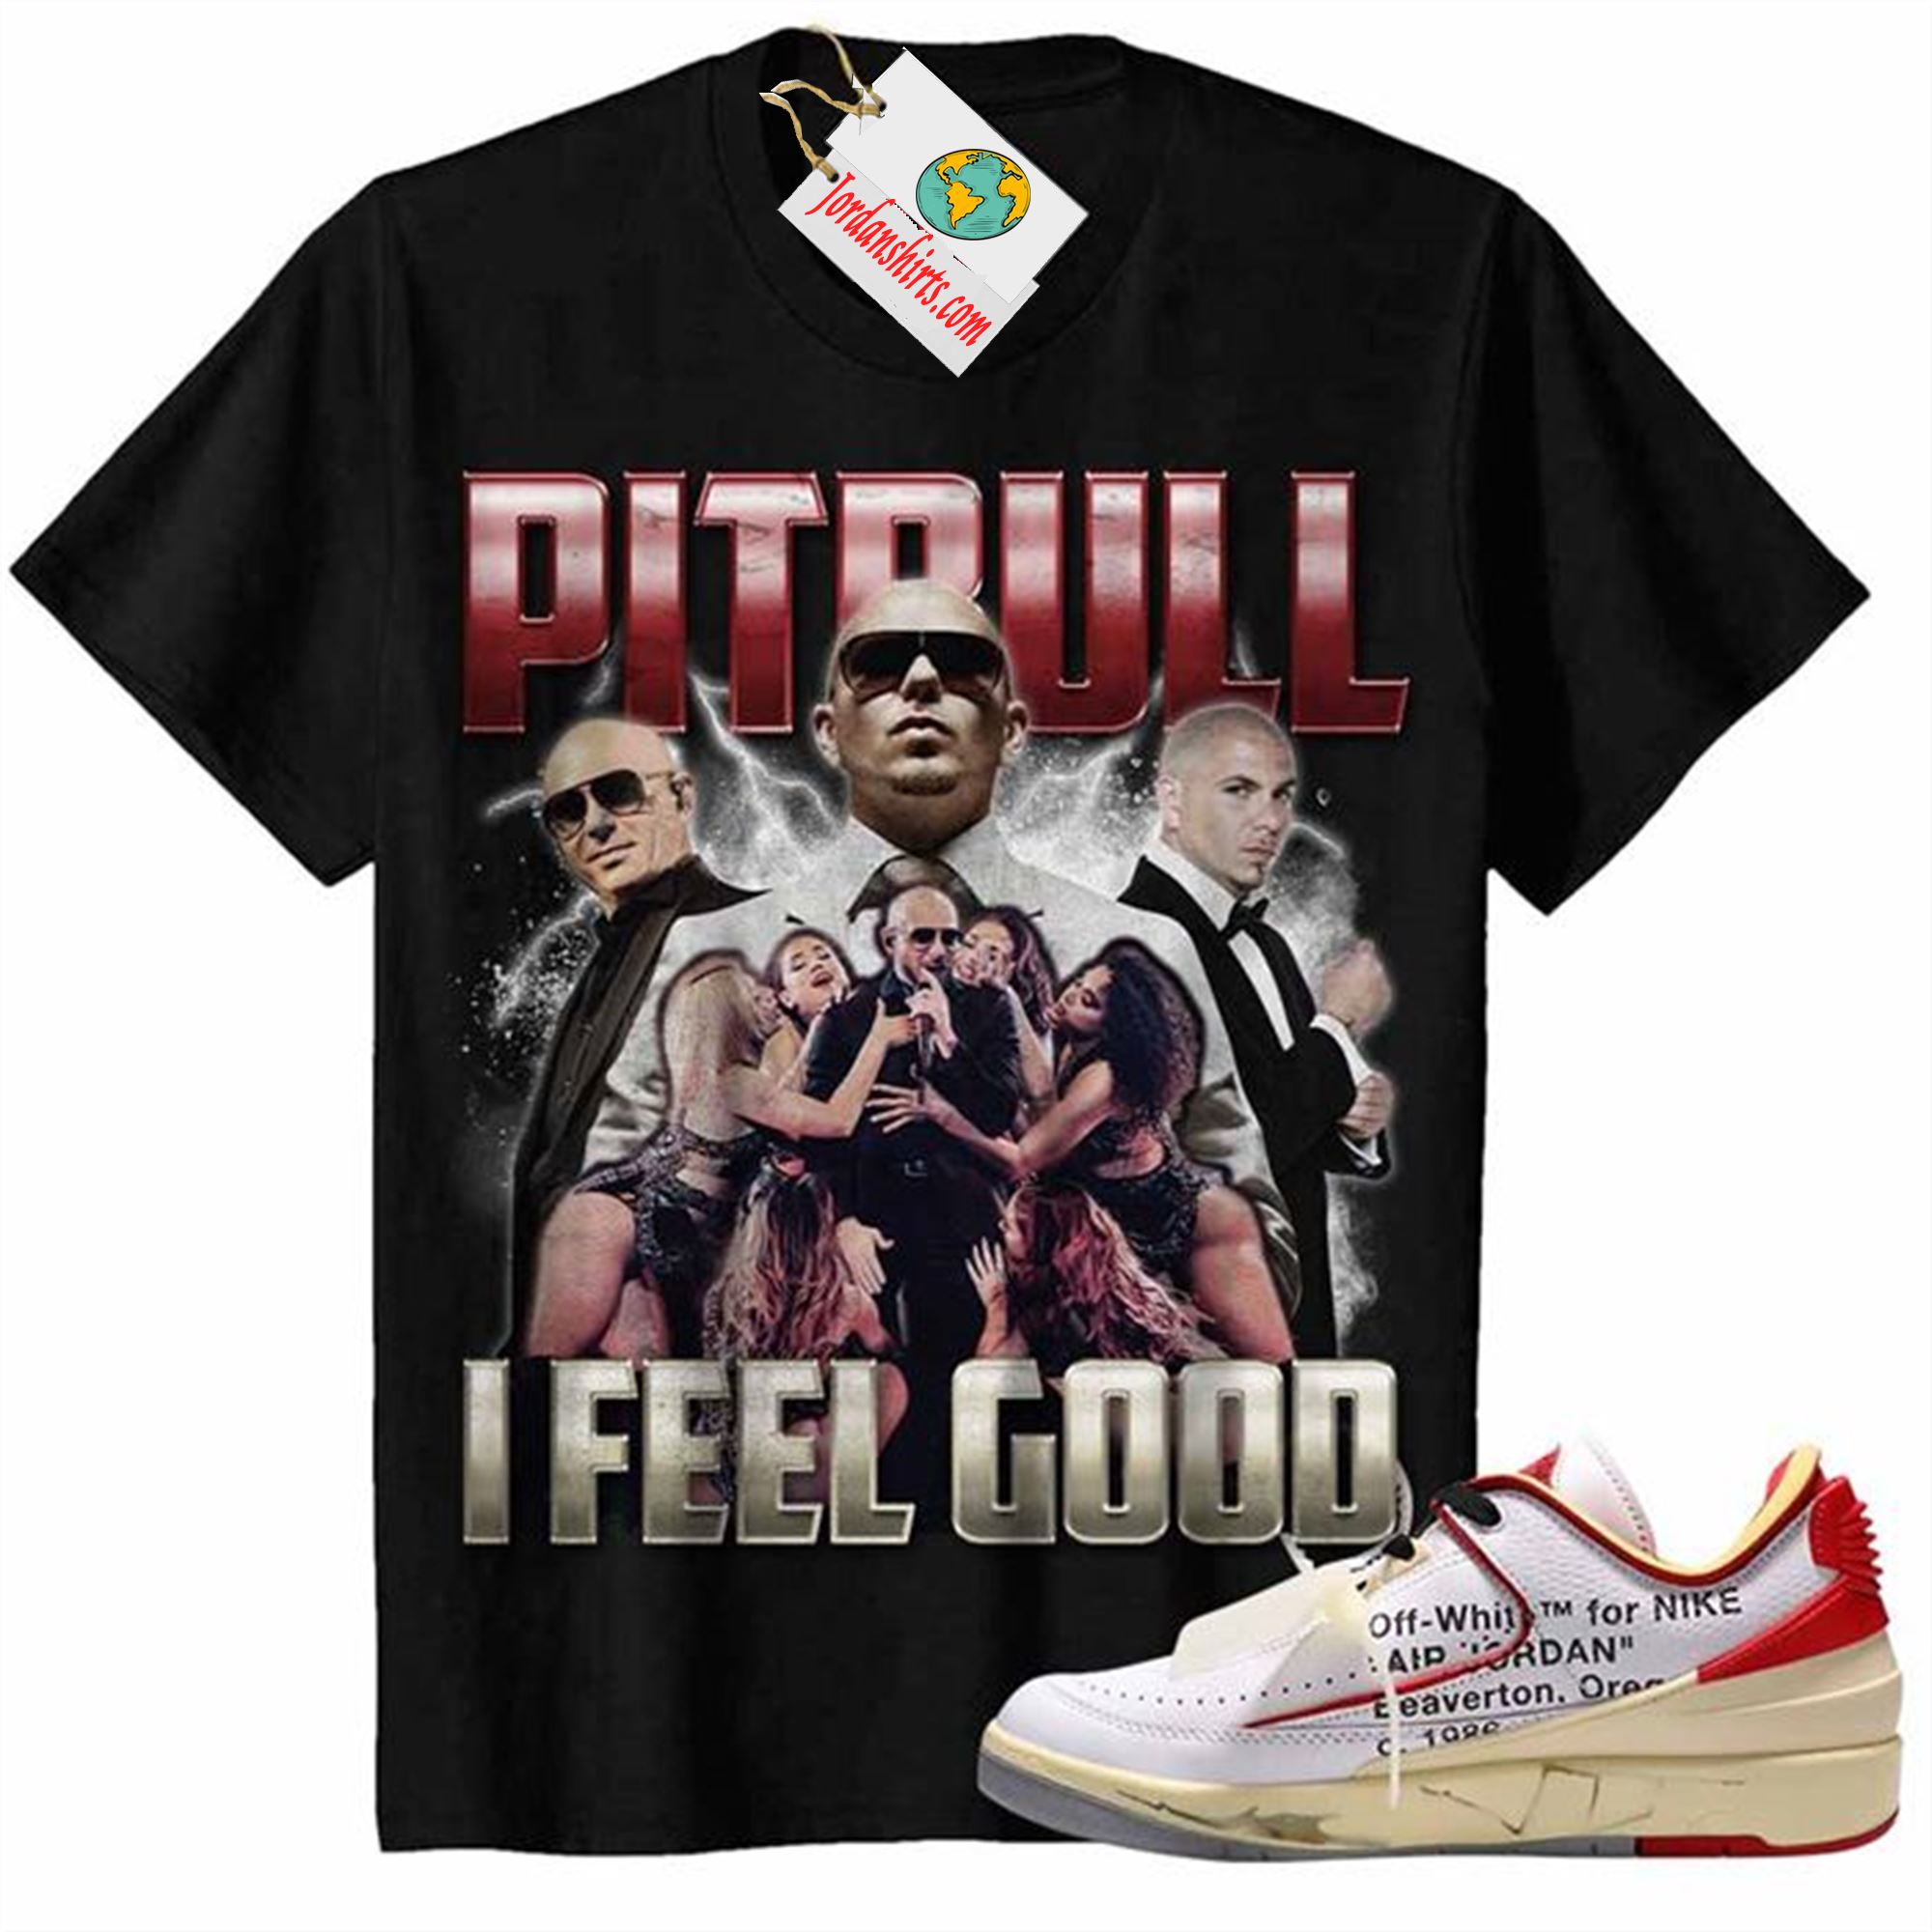 Jordan 2 Shirt, Pitbull I Feel Good Rap Hip Hop Bootleg Vintage Black Air Jordan 2 Low White Red Off-white 2s Full Size Up To 5xl